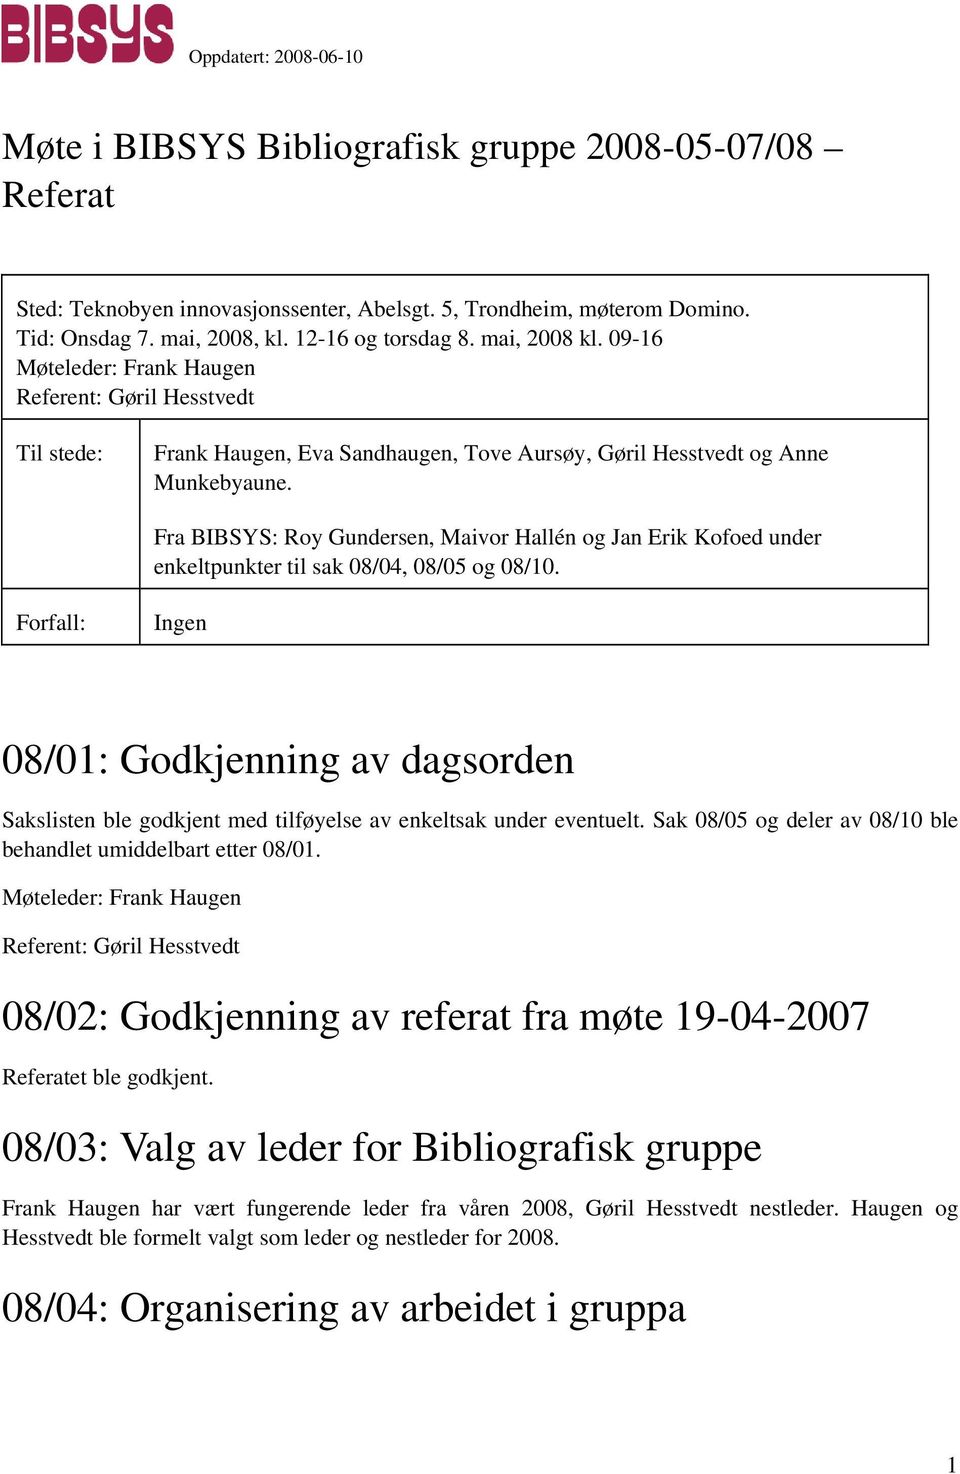 Fra BIBSYS: Roy Gundersen, Maivor Hallén og Jan Erik Kofoed under enkeltpunkter til sak 08/04, 08/05 og 08/10.